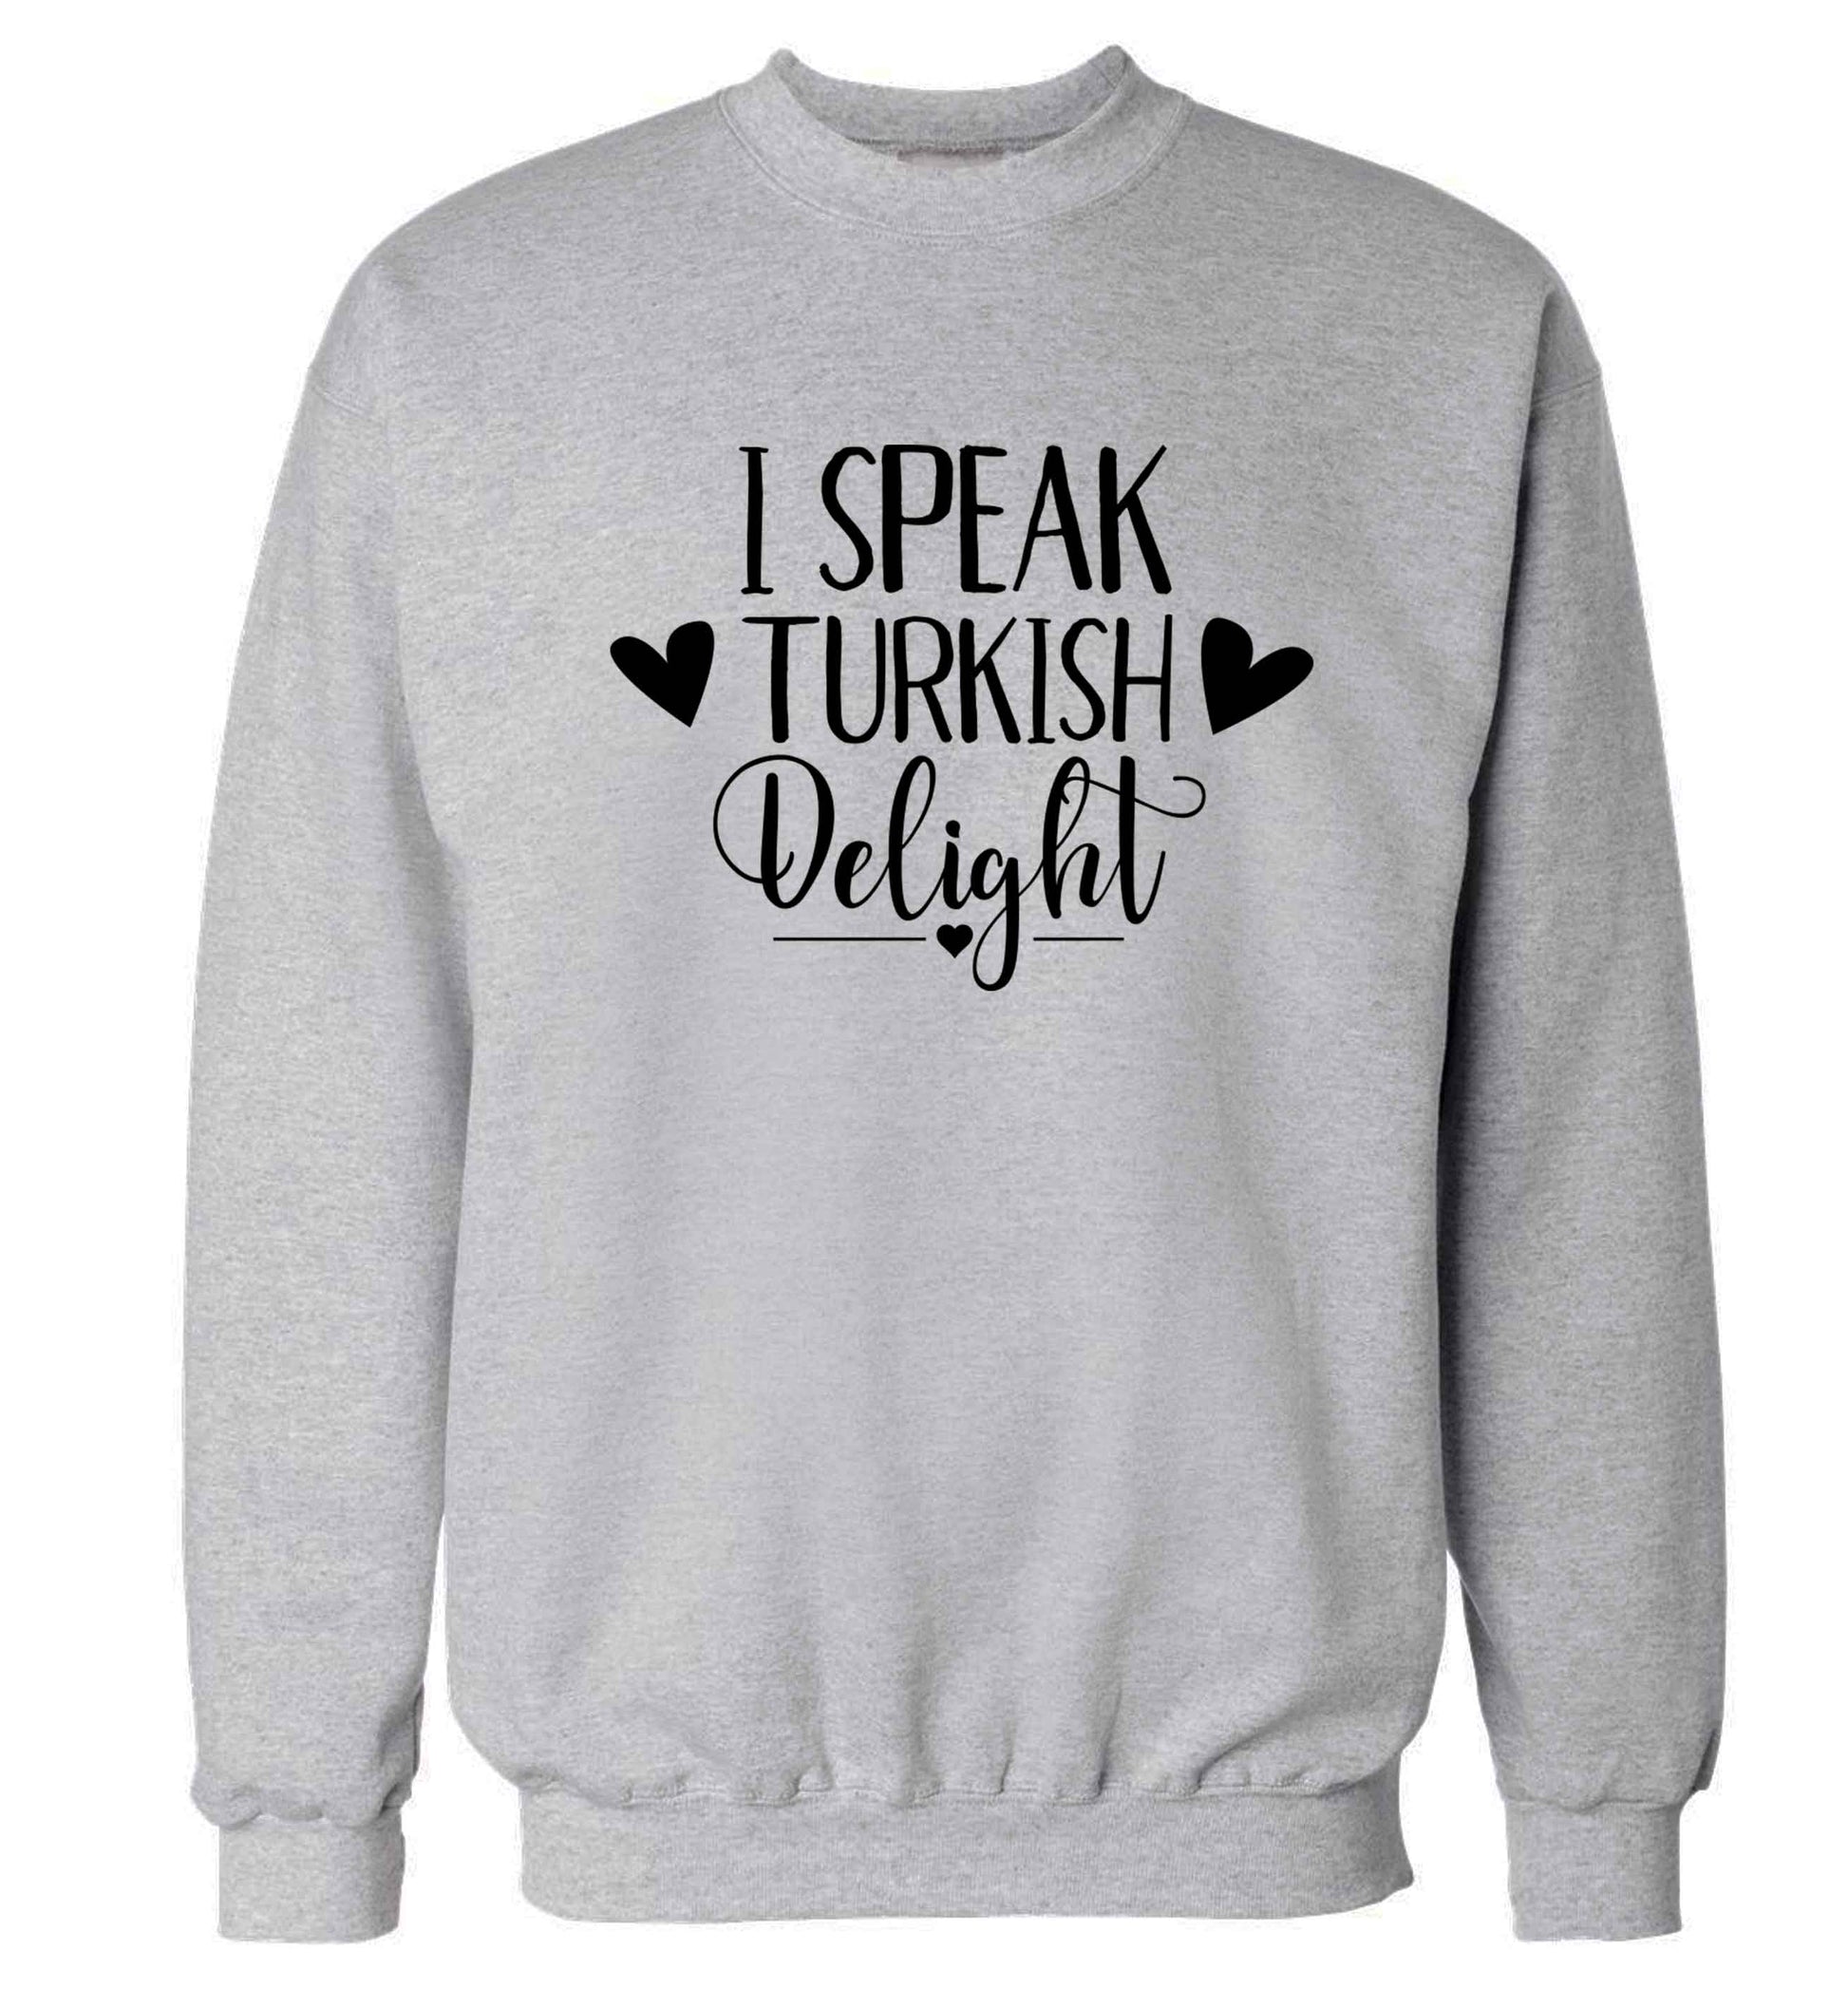 I speak turkish...delight Adult's unisex grey Sweater 2XL